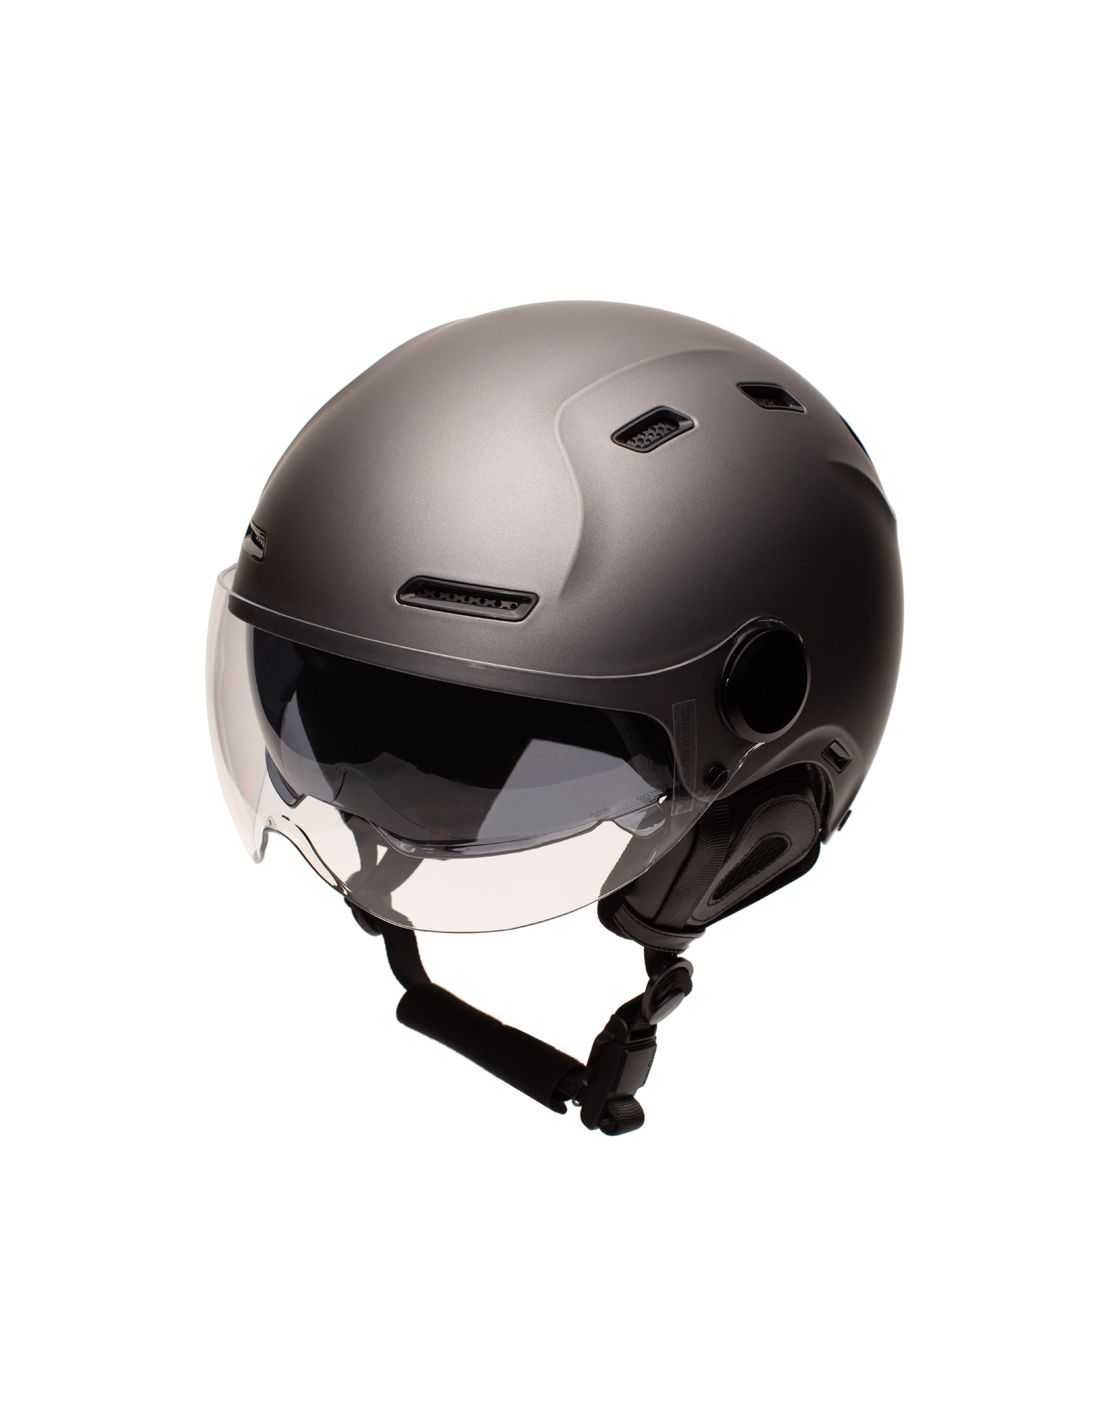 https://marko-helmets.com/4509-thickbox_default/casque-velo-e-bike-cadence-marko-helmets.jpg